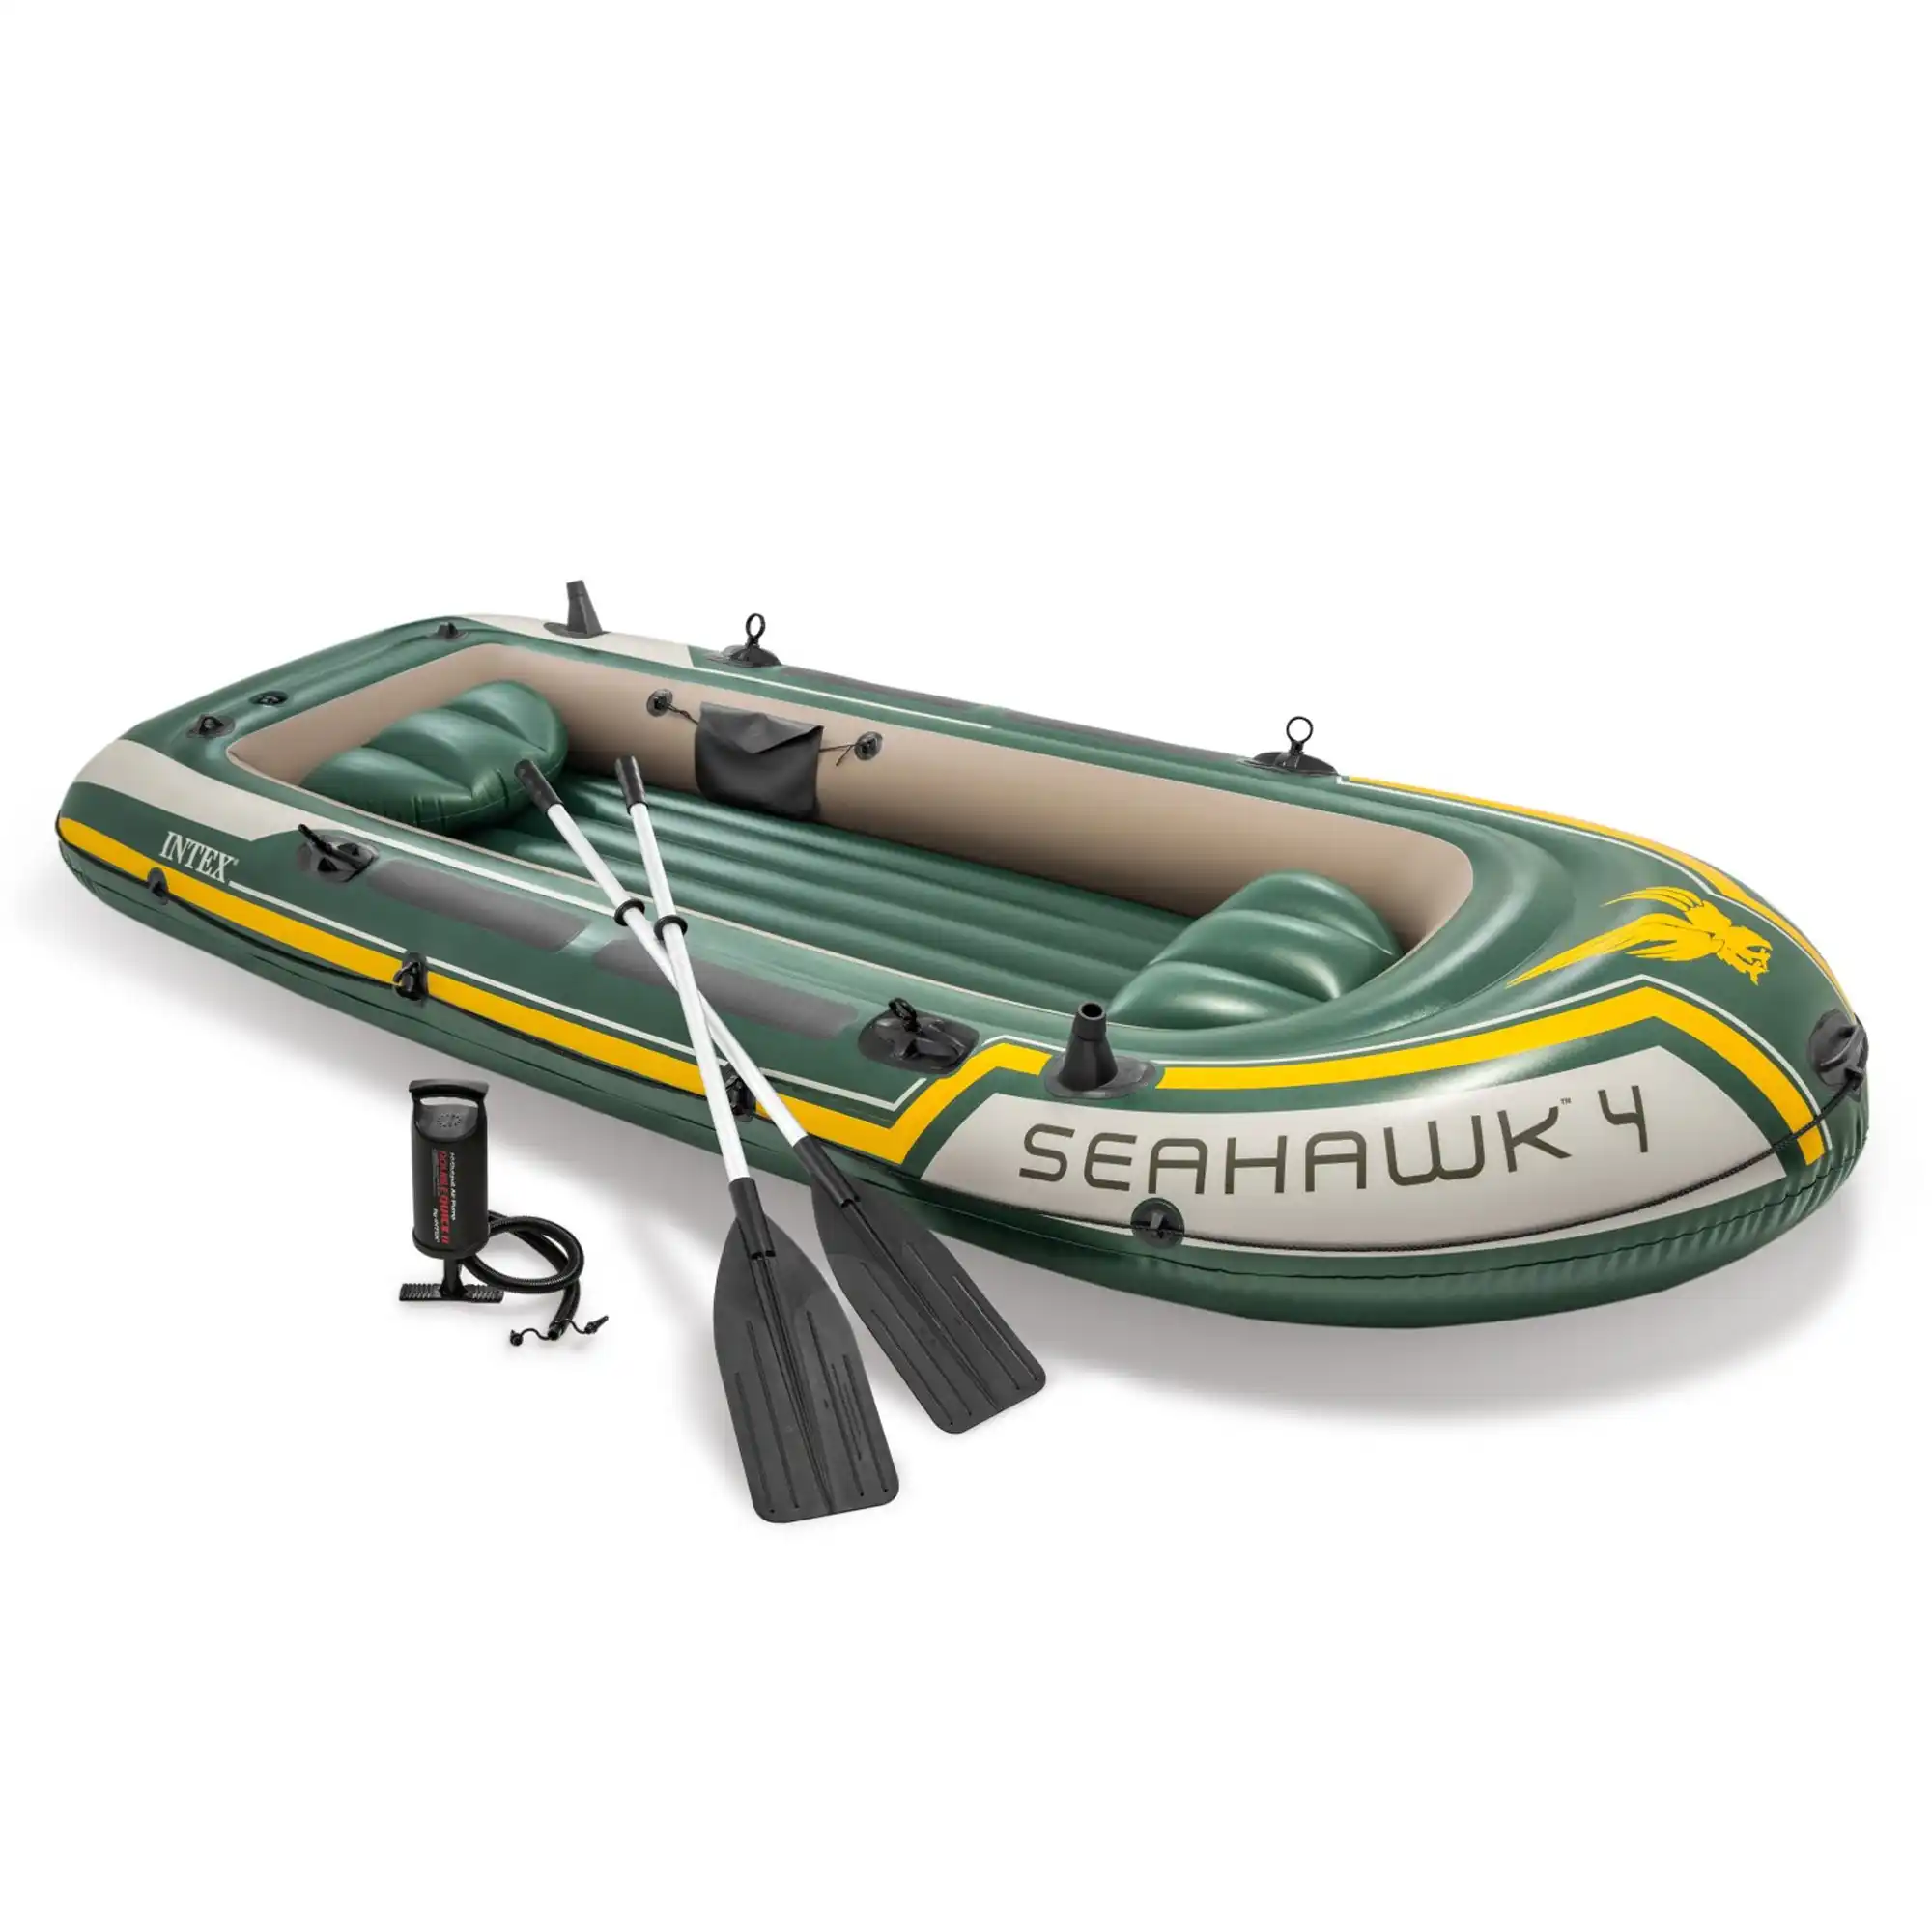 Seahawk 4 Boat Set